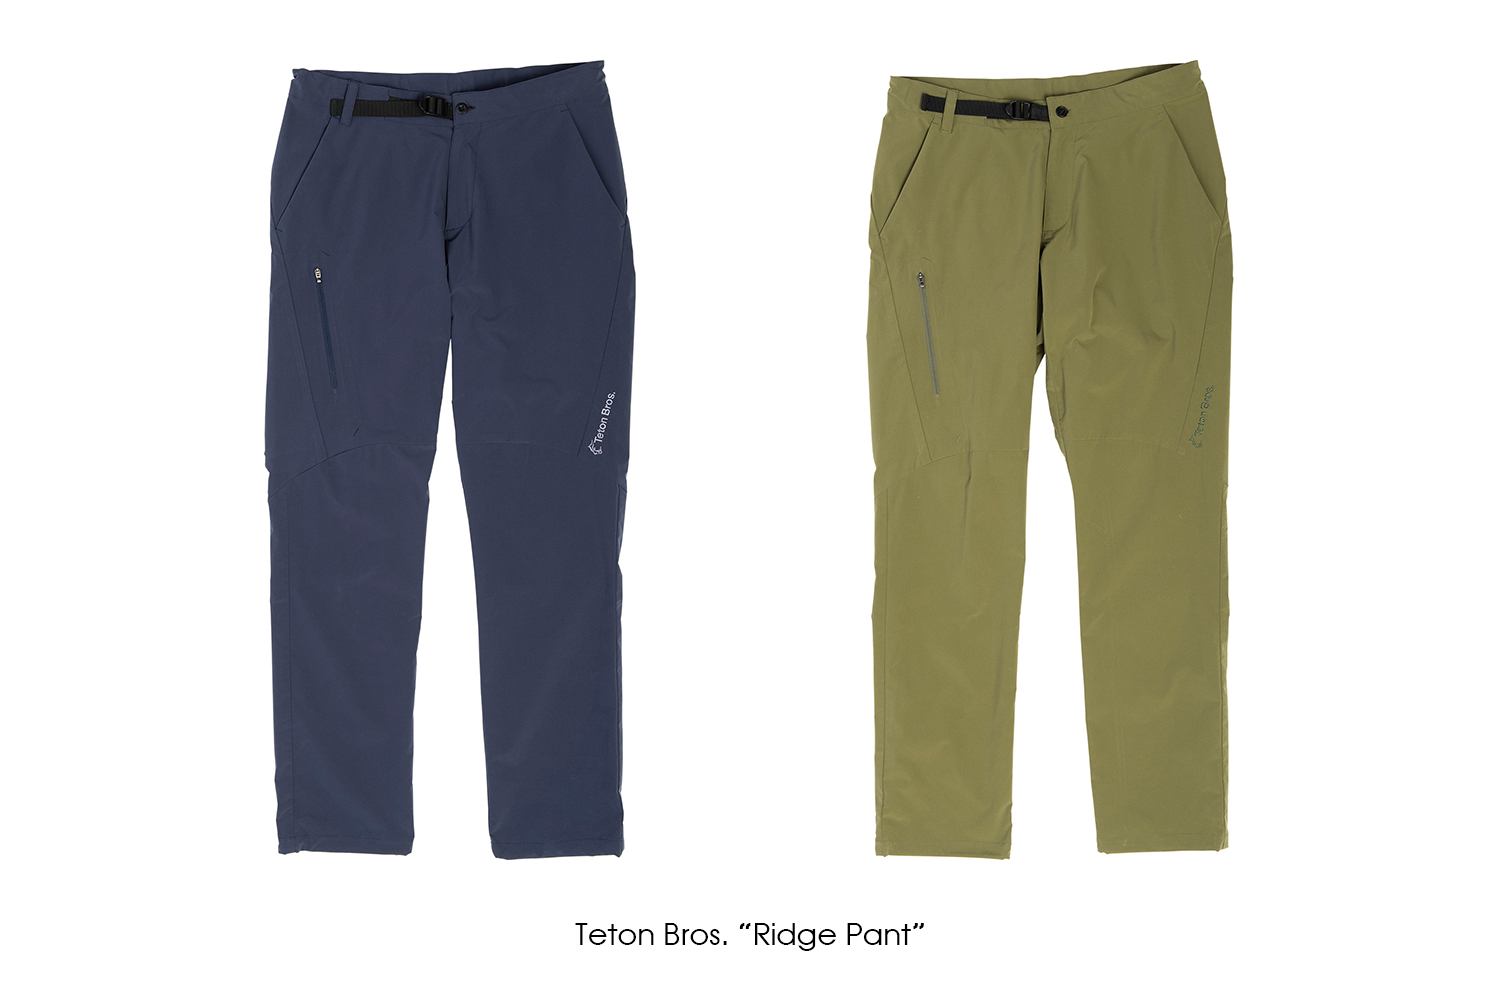 Teton Bros. "Ridge Pant"